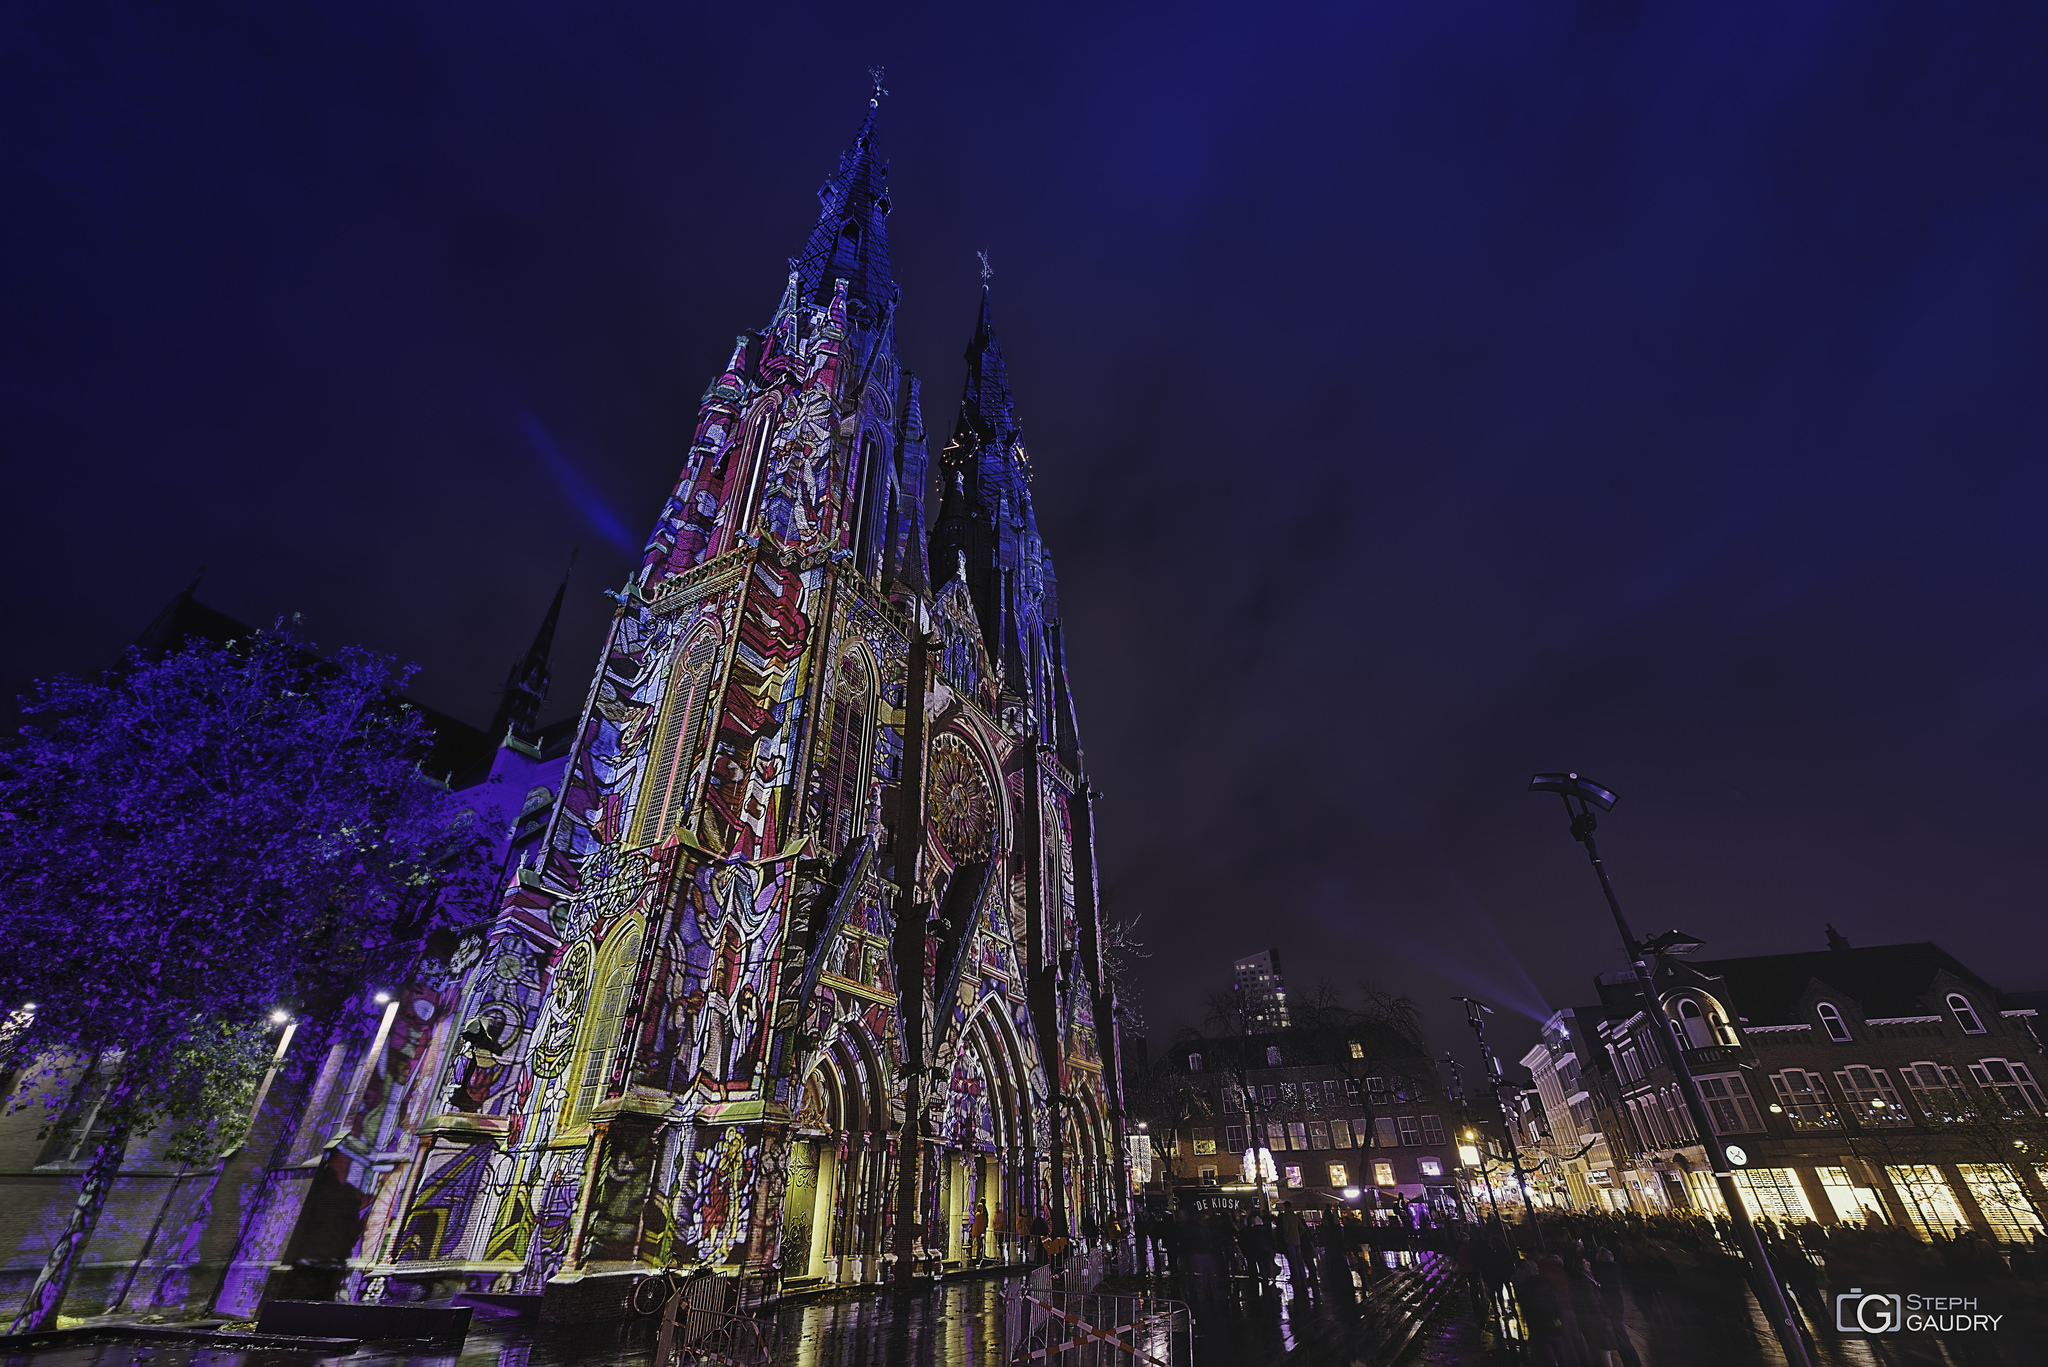 Sint Catharinakerk Eindhoven glow 2017 [Click to start slideshow]